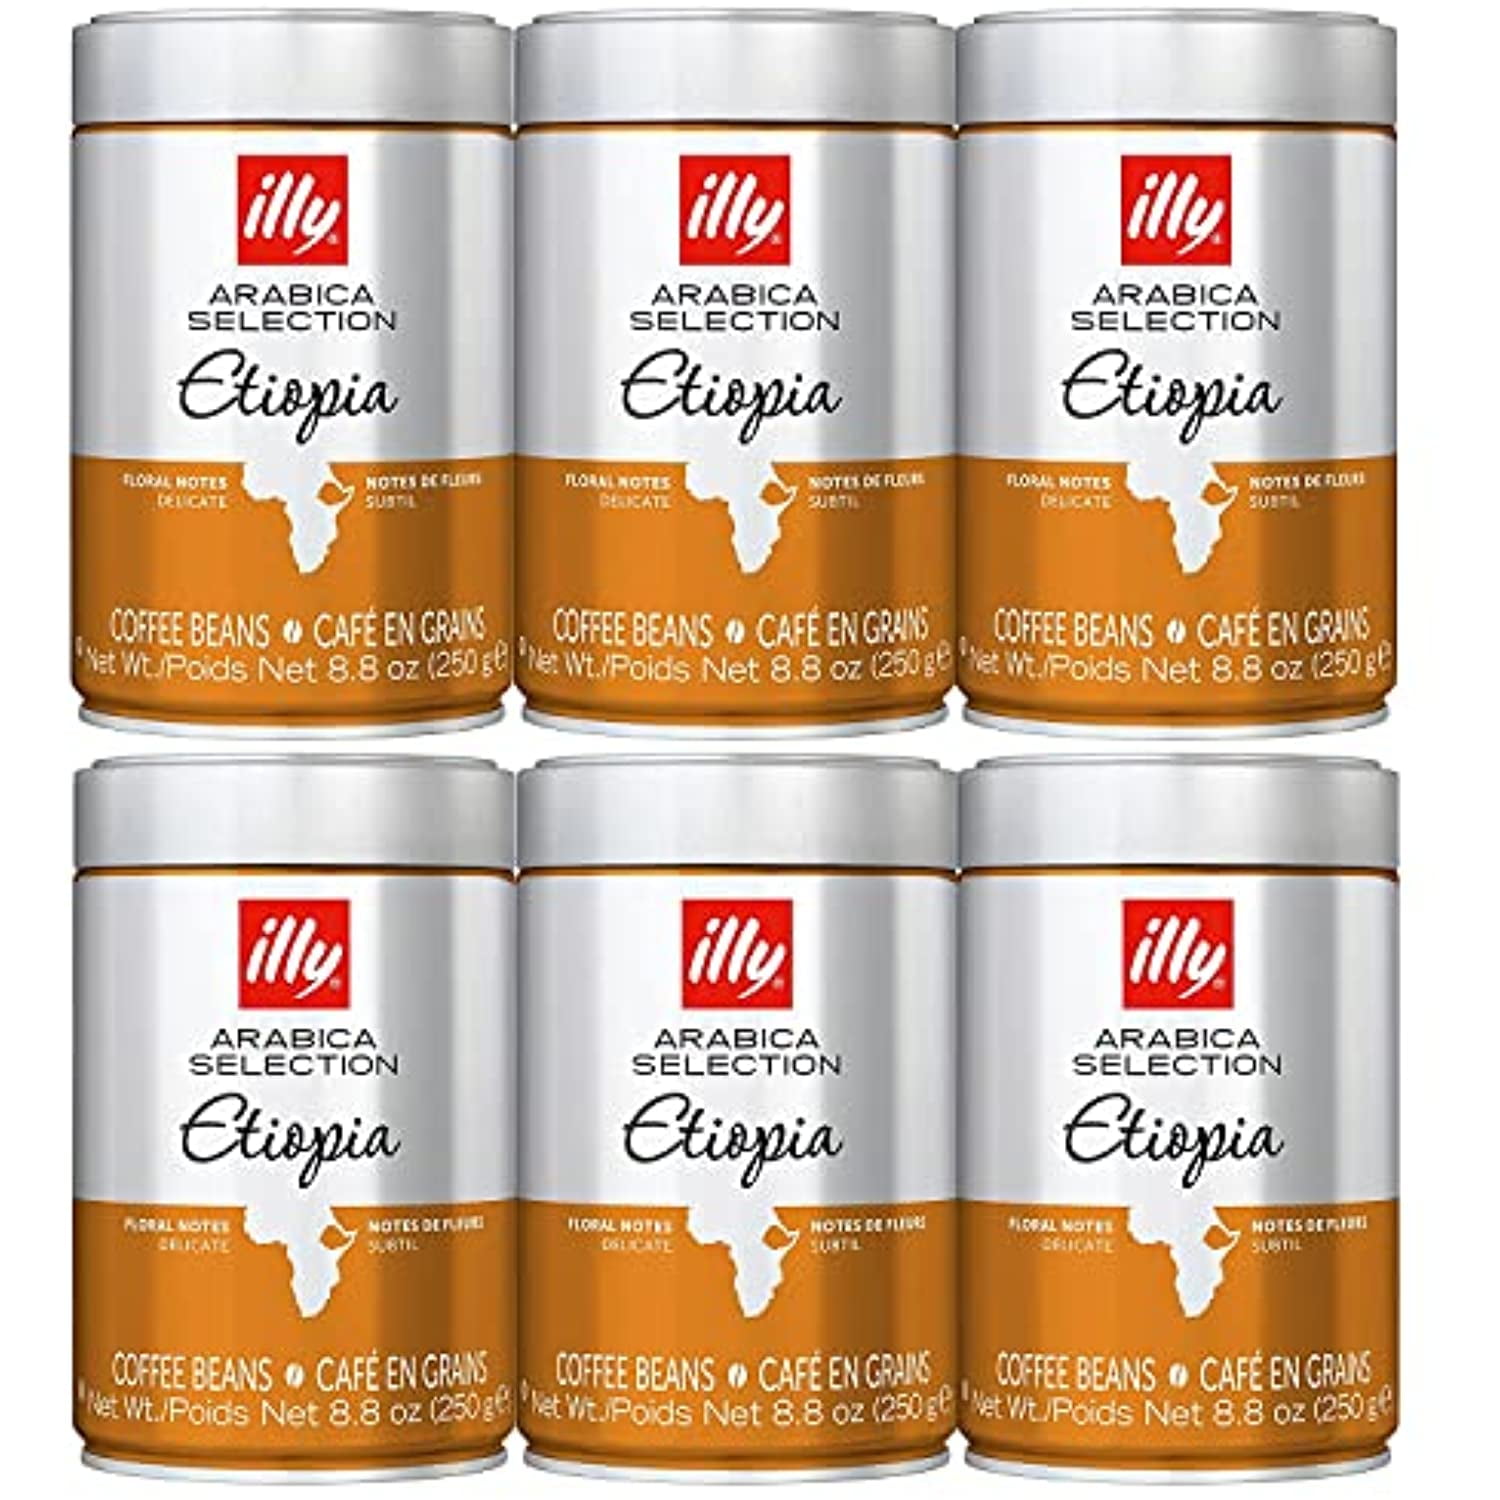 Illy Arabica Selection Etiopia – buy online now! Illy –German Tea